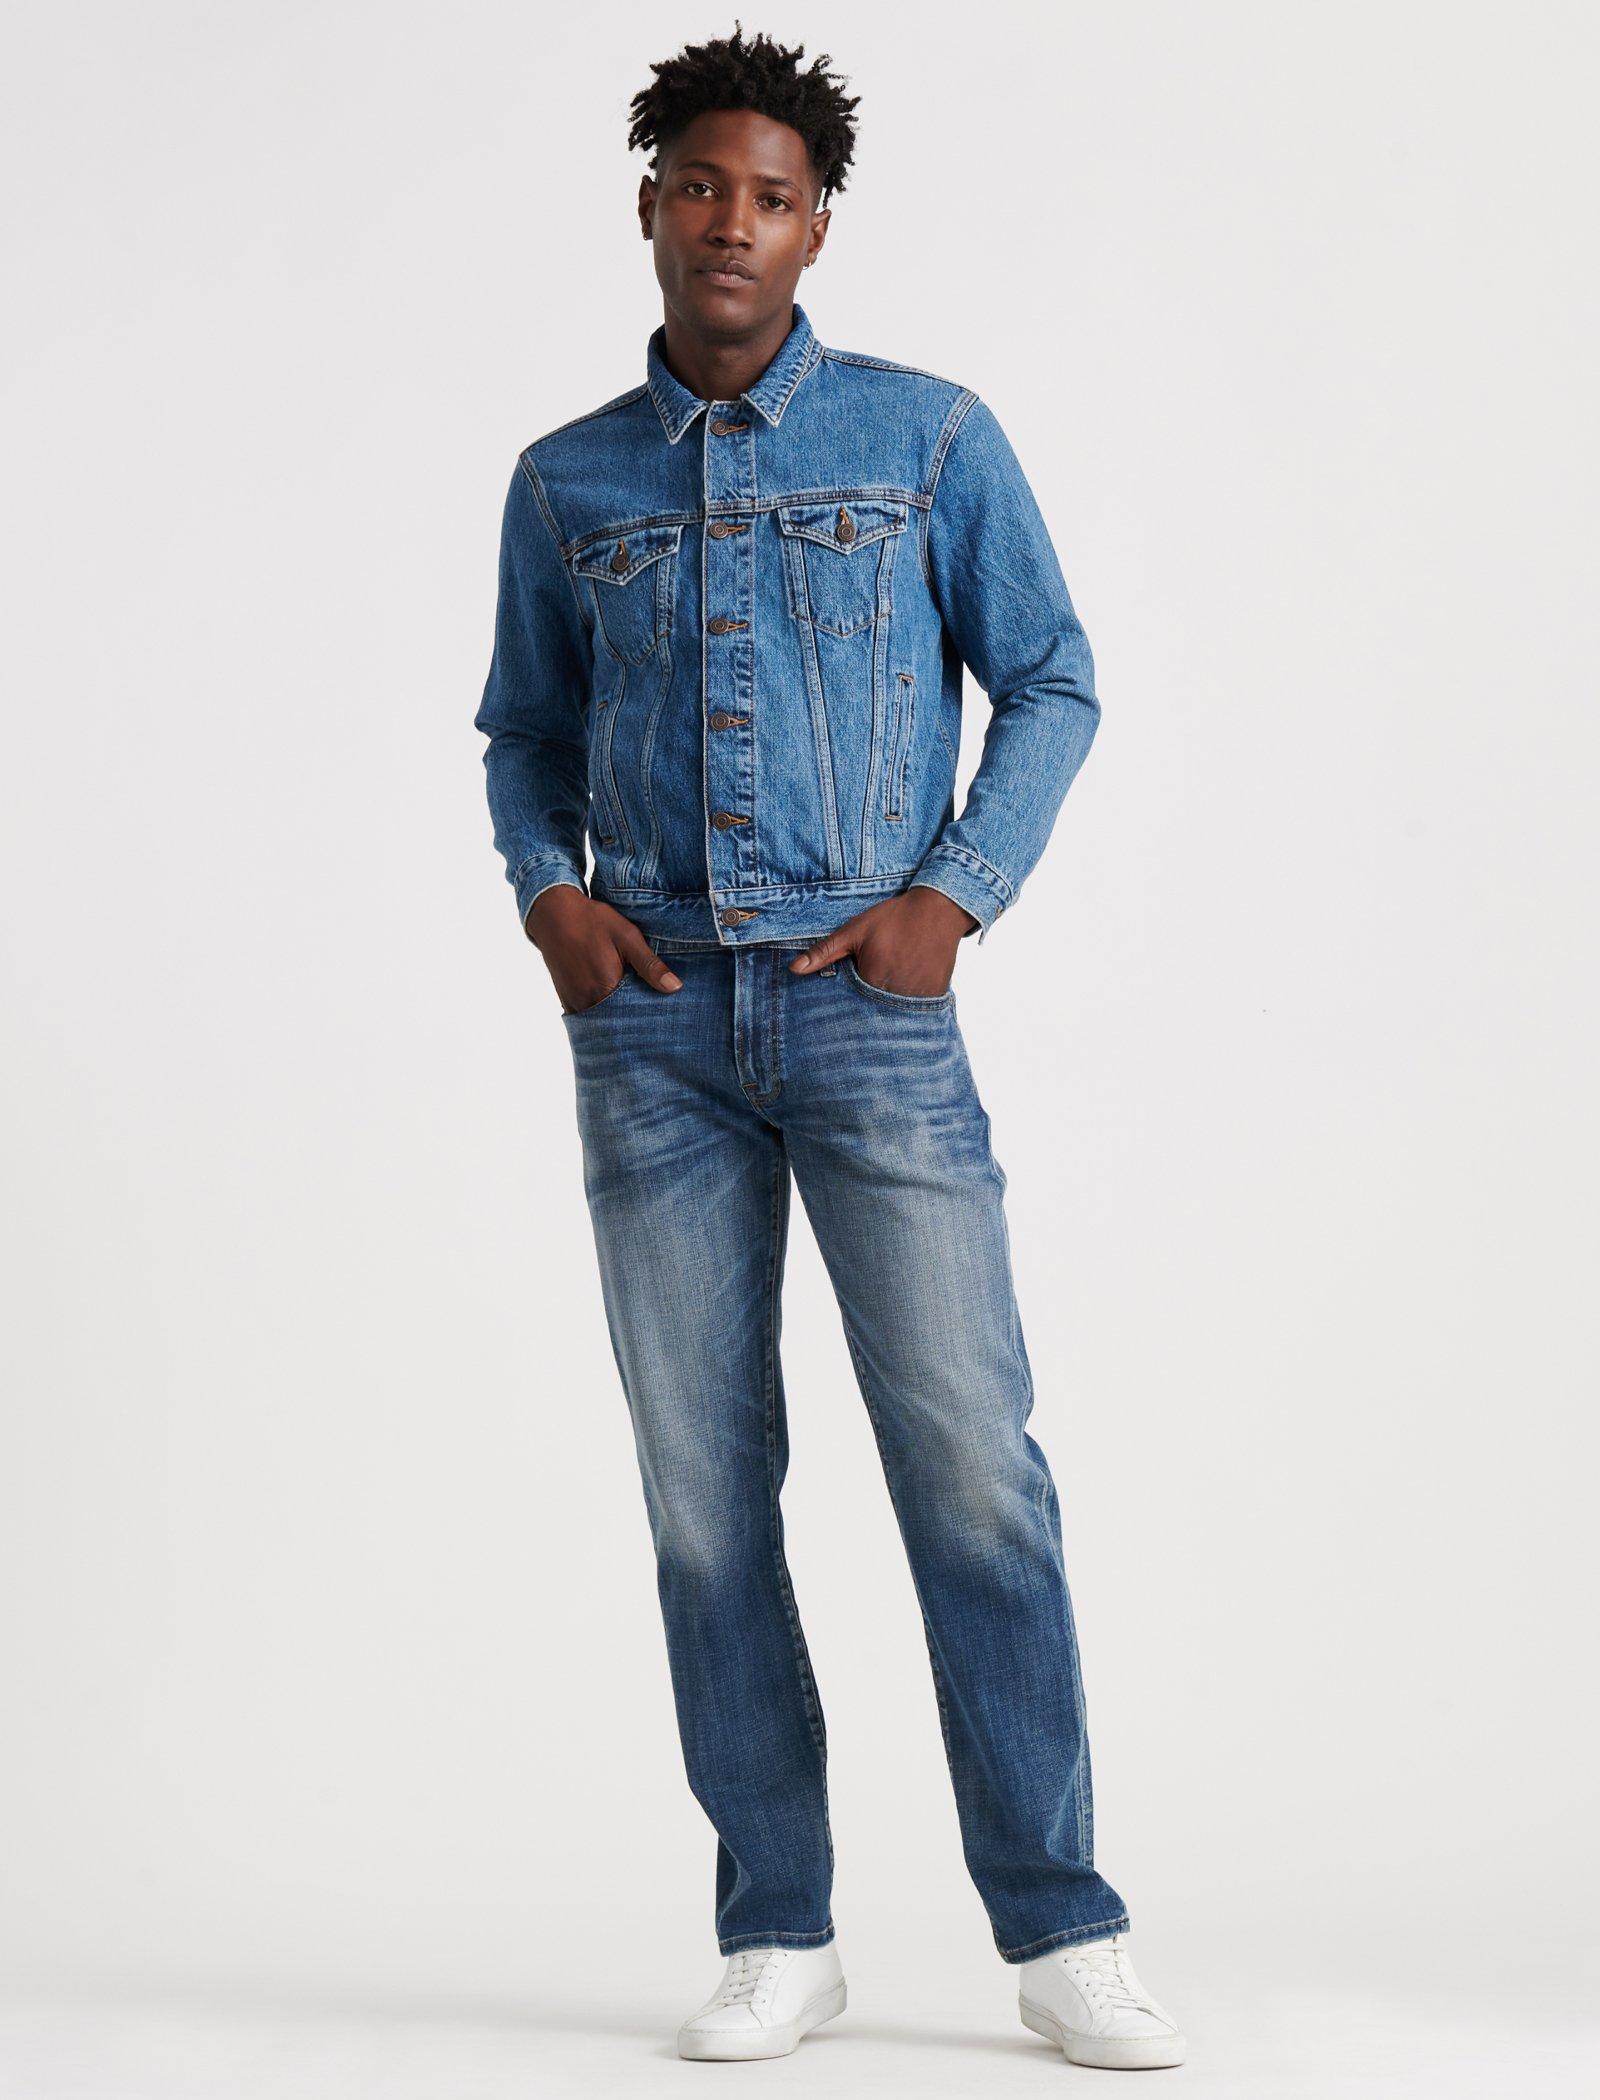 lucky brand 221 original straight leg jeans